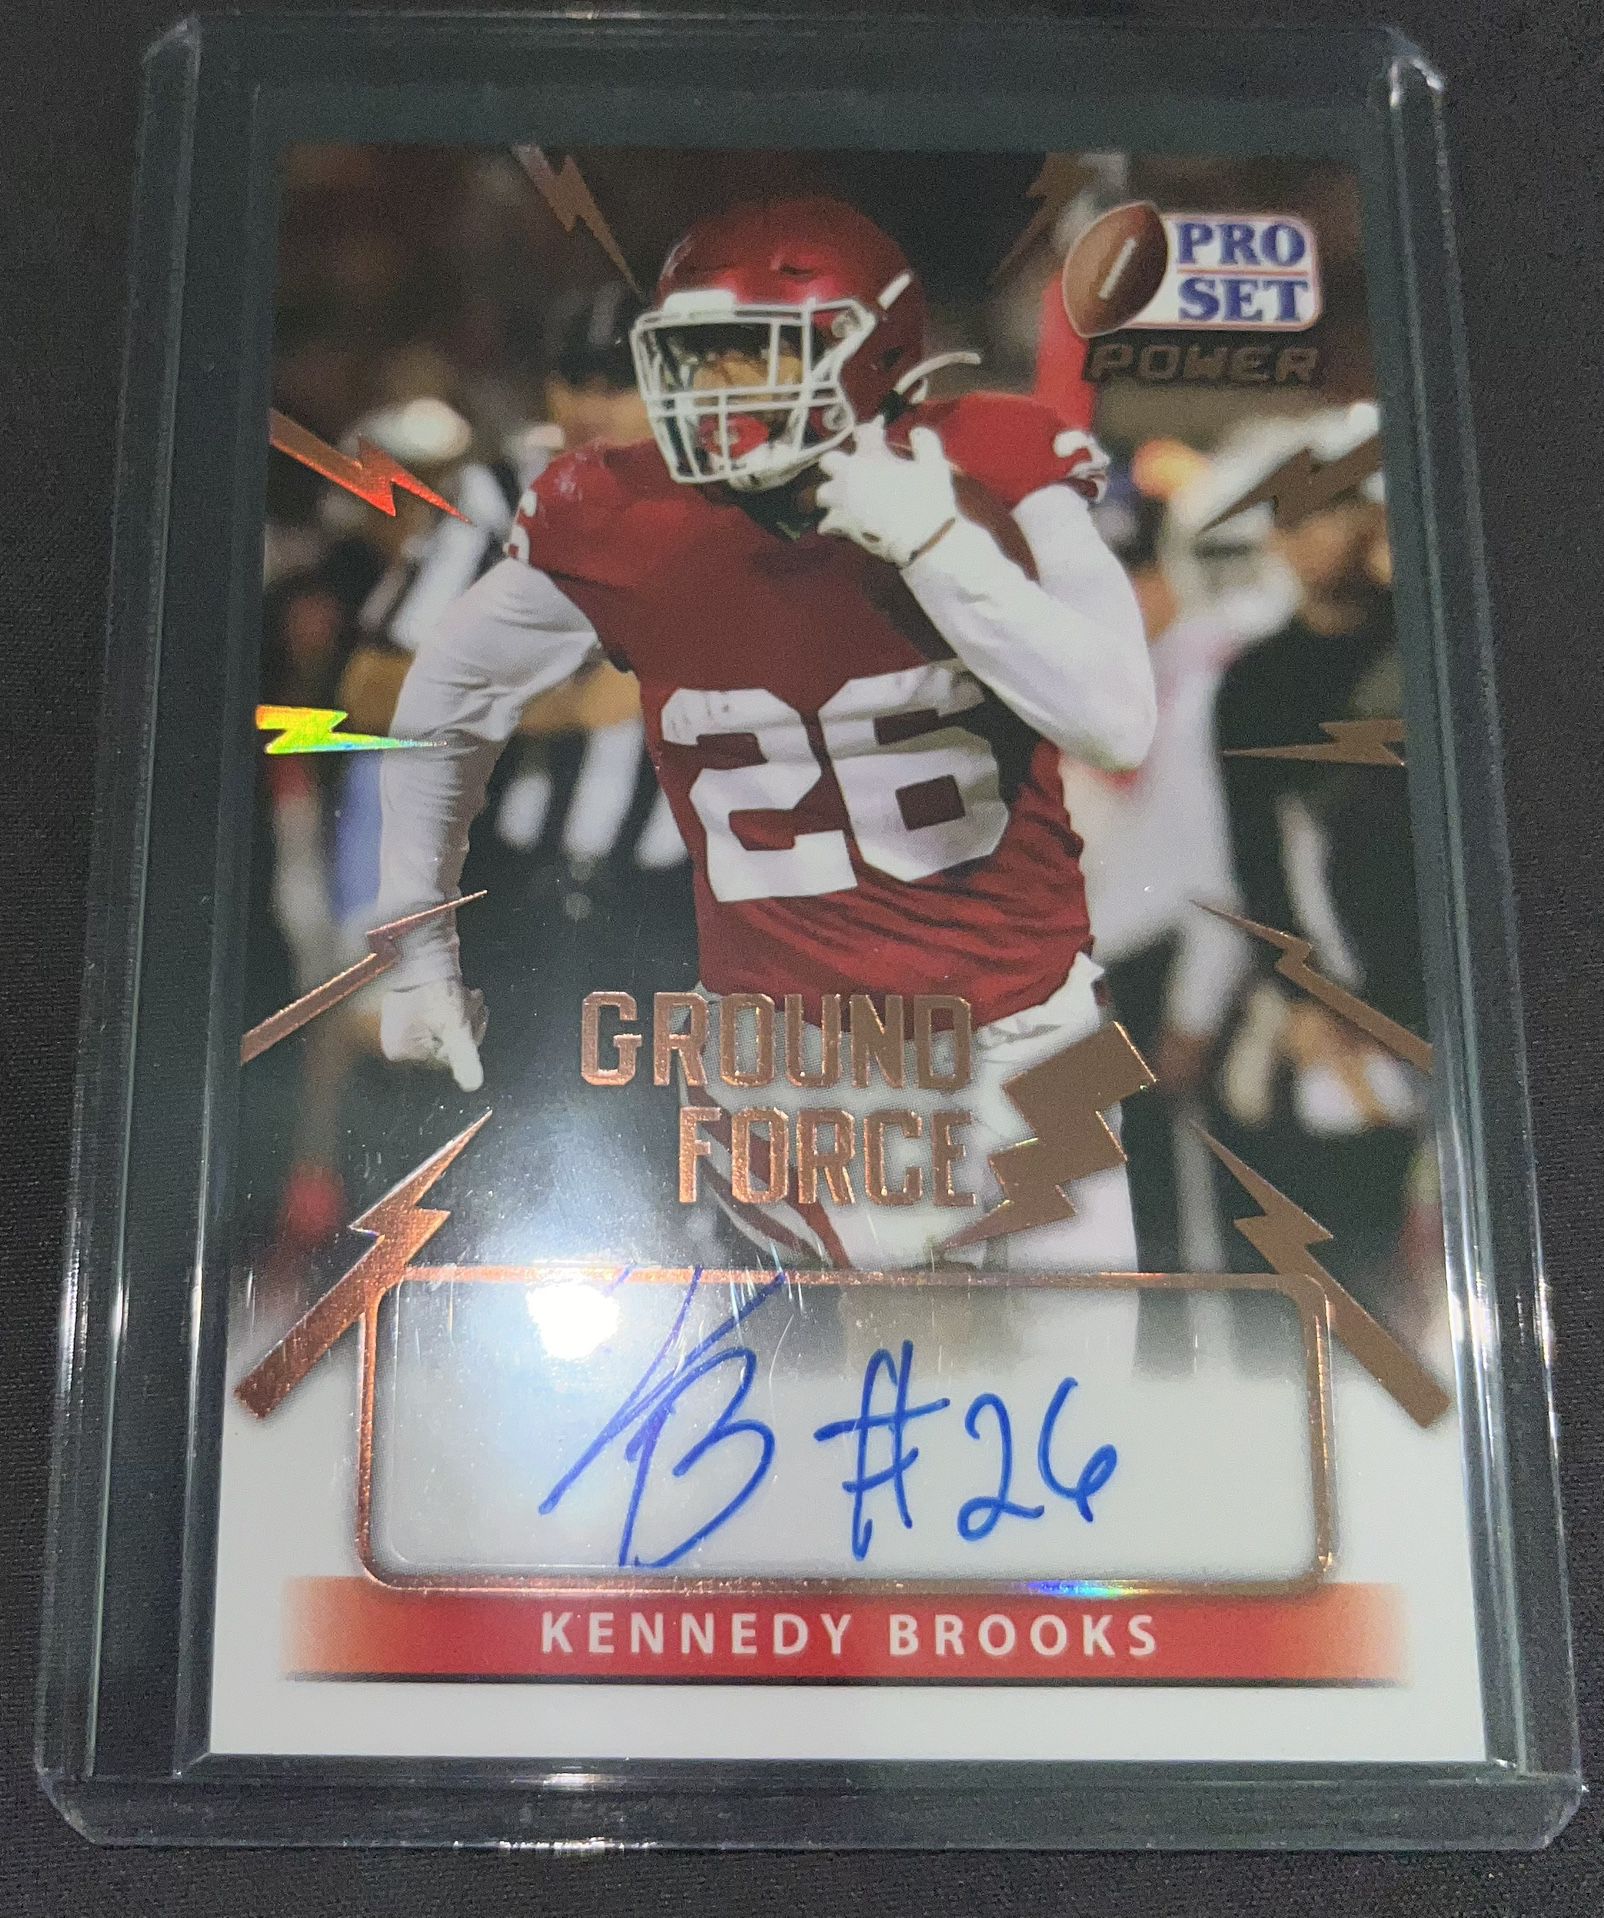 Kennedy Brooks Autographed Card